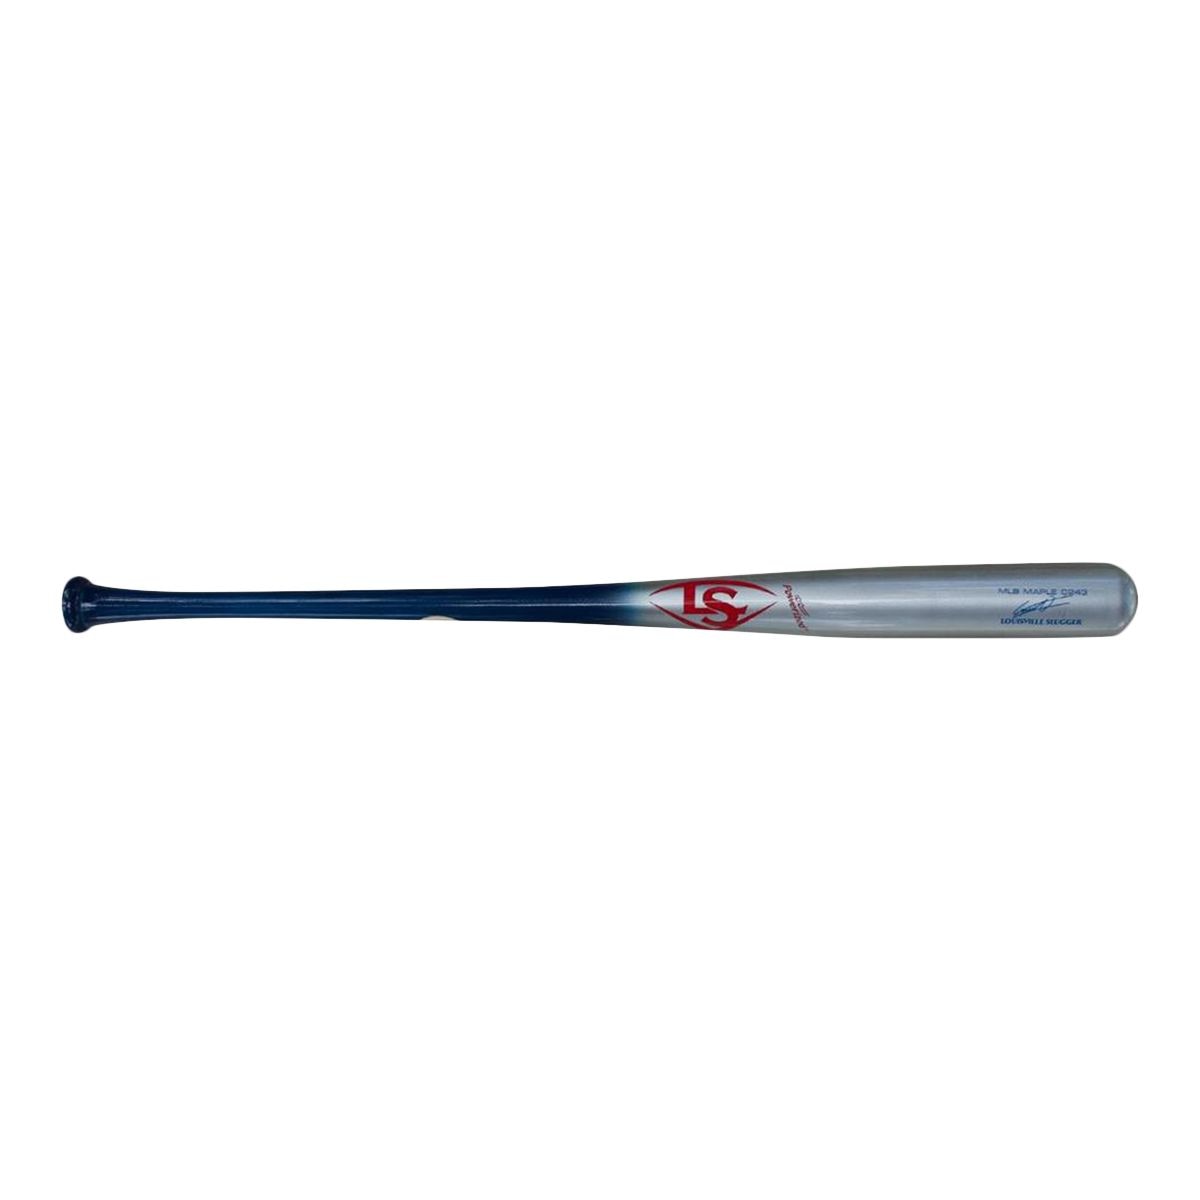  Louisville Slugger Prime Acuna - Maple RA13 Baseball Bat - 31  : Sports & Outdoors